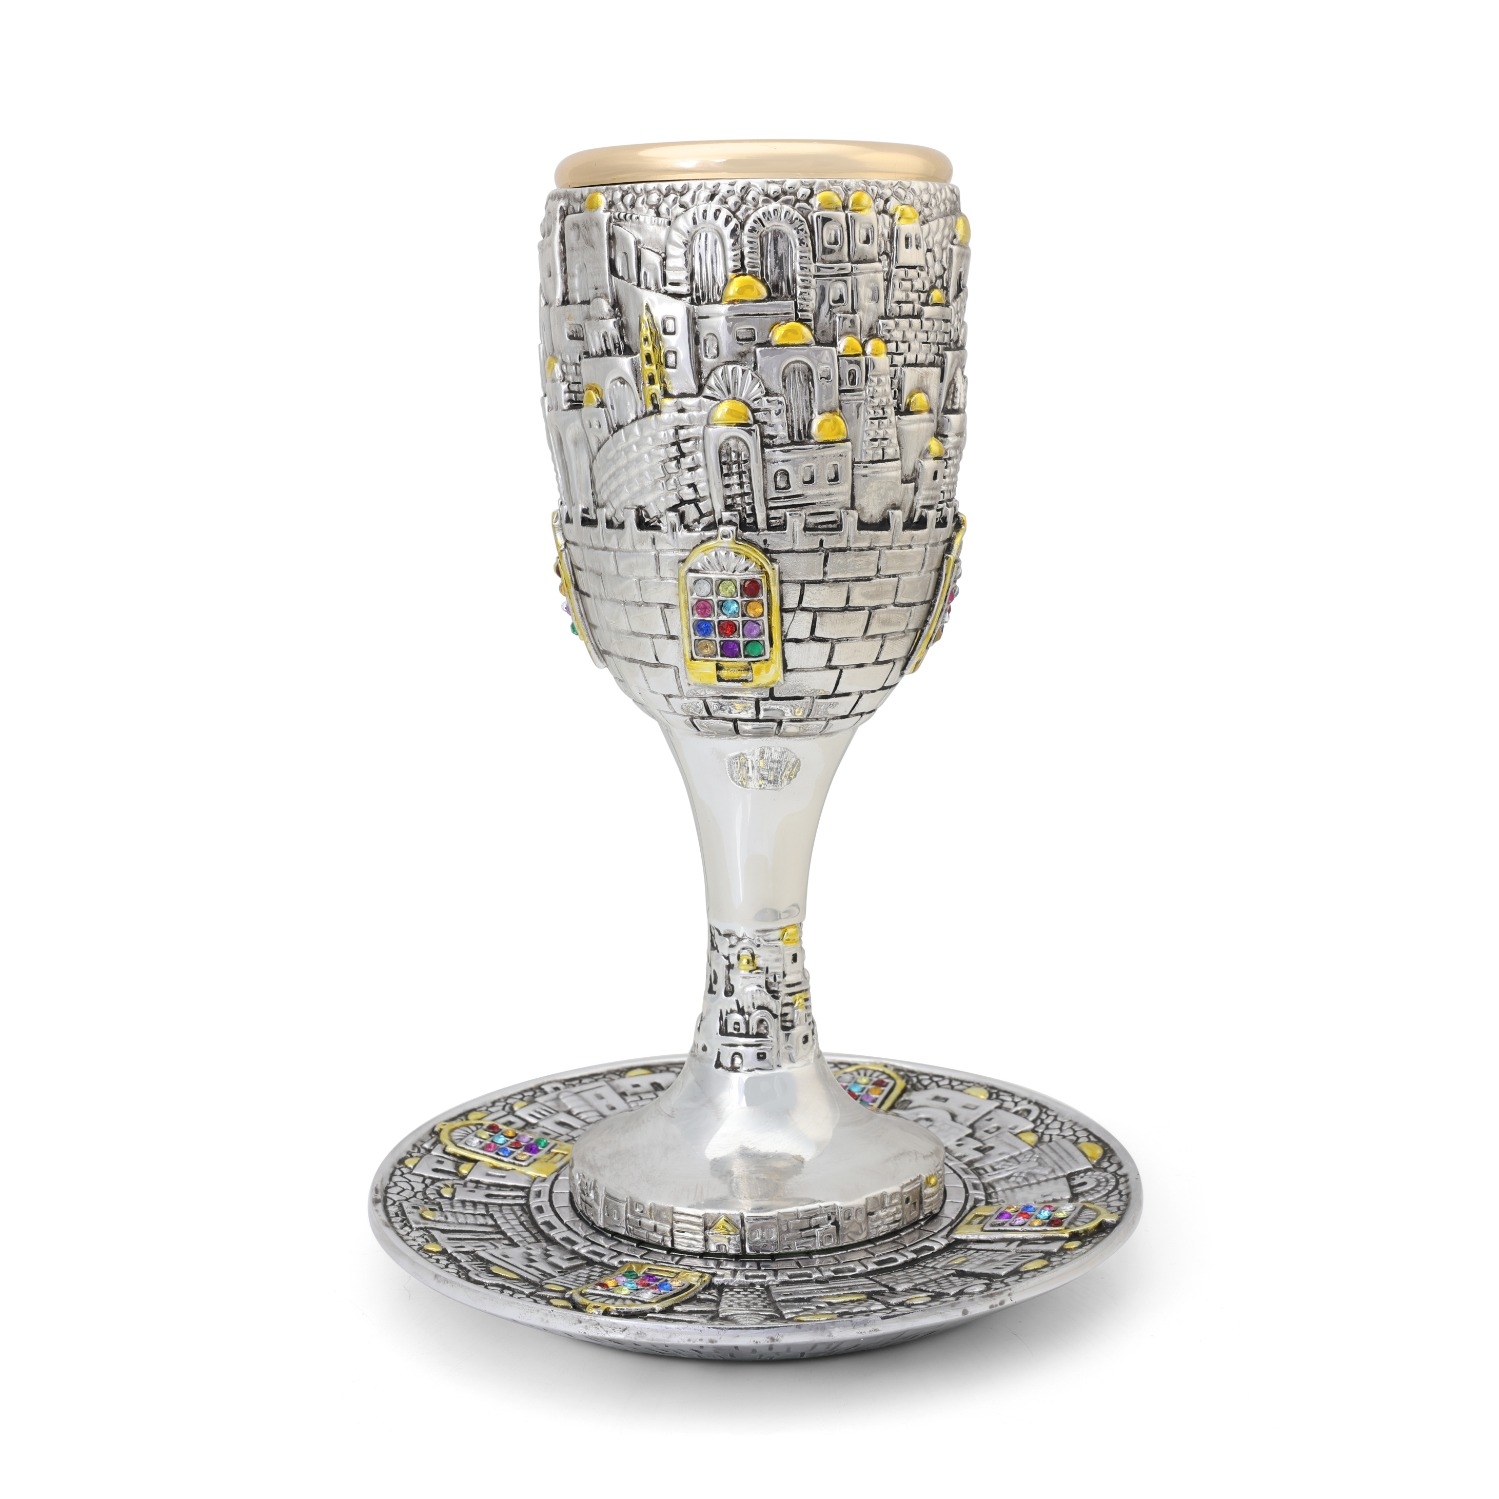 Grand Gold-Accented Cup of Elijah With Jerusalem Design - 1